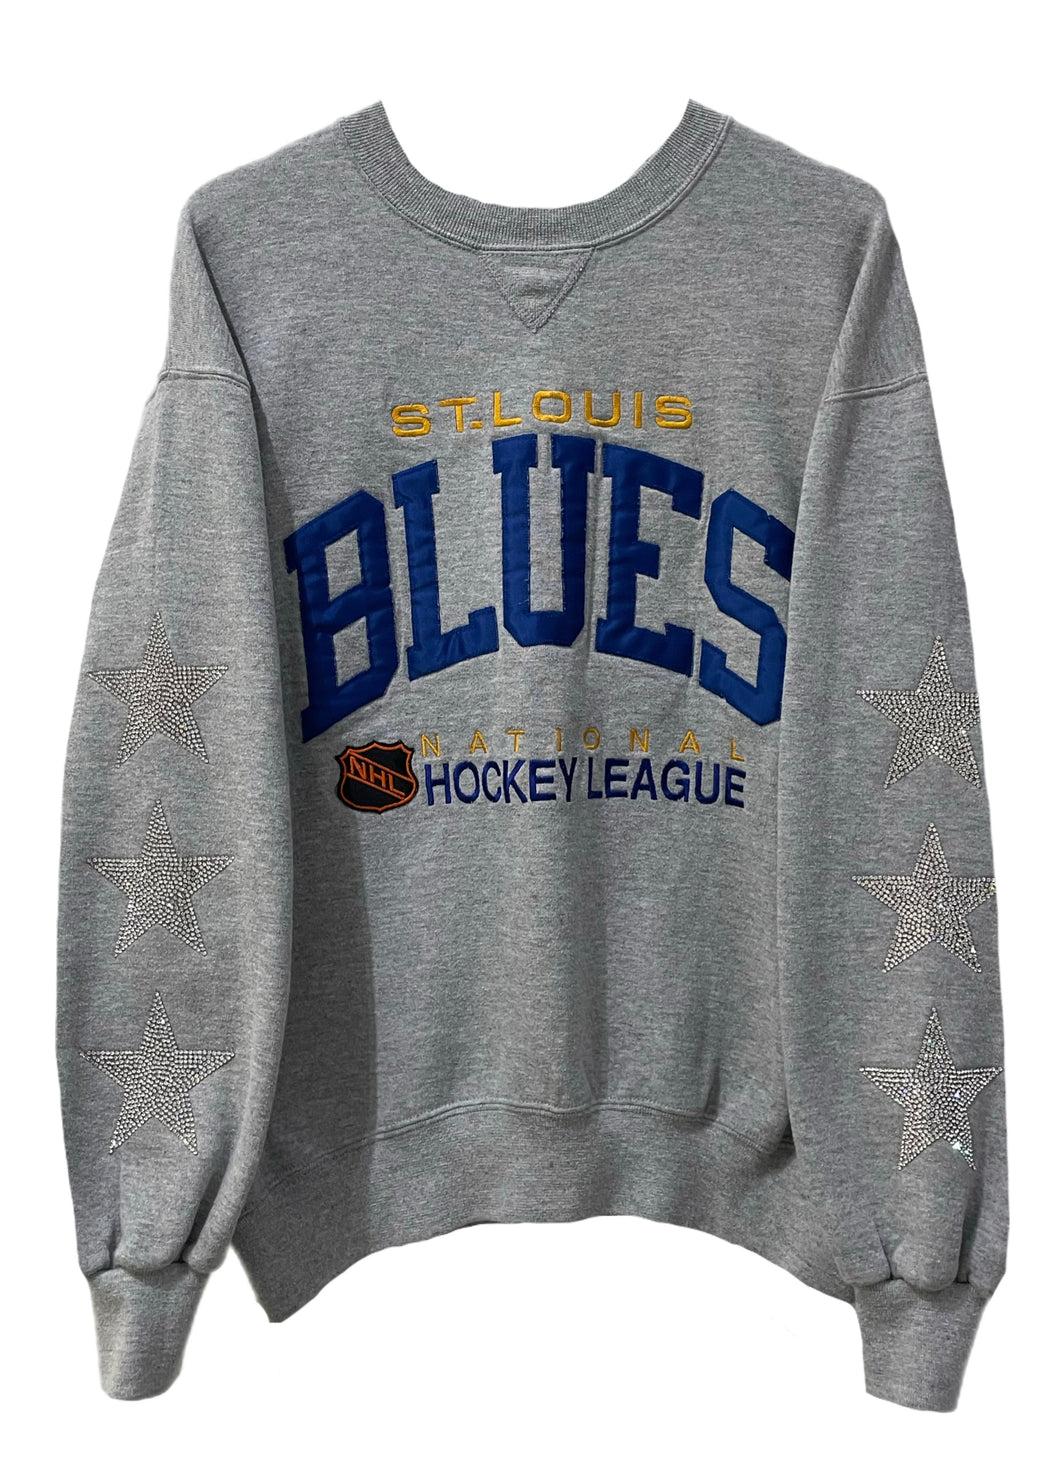 St. Louis Blues, NHL One of a KIND Vintage Sweatshirt with Three Crystal Star Design